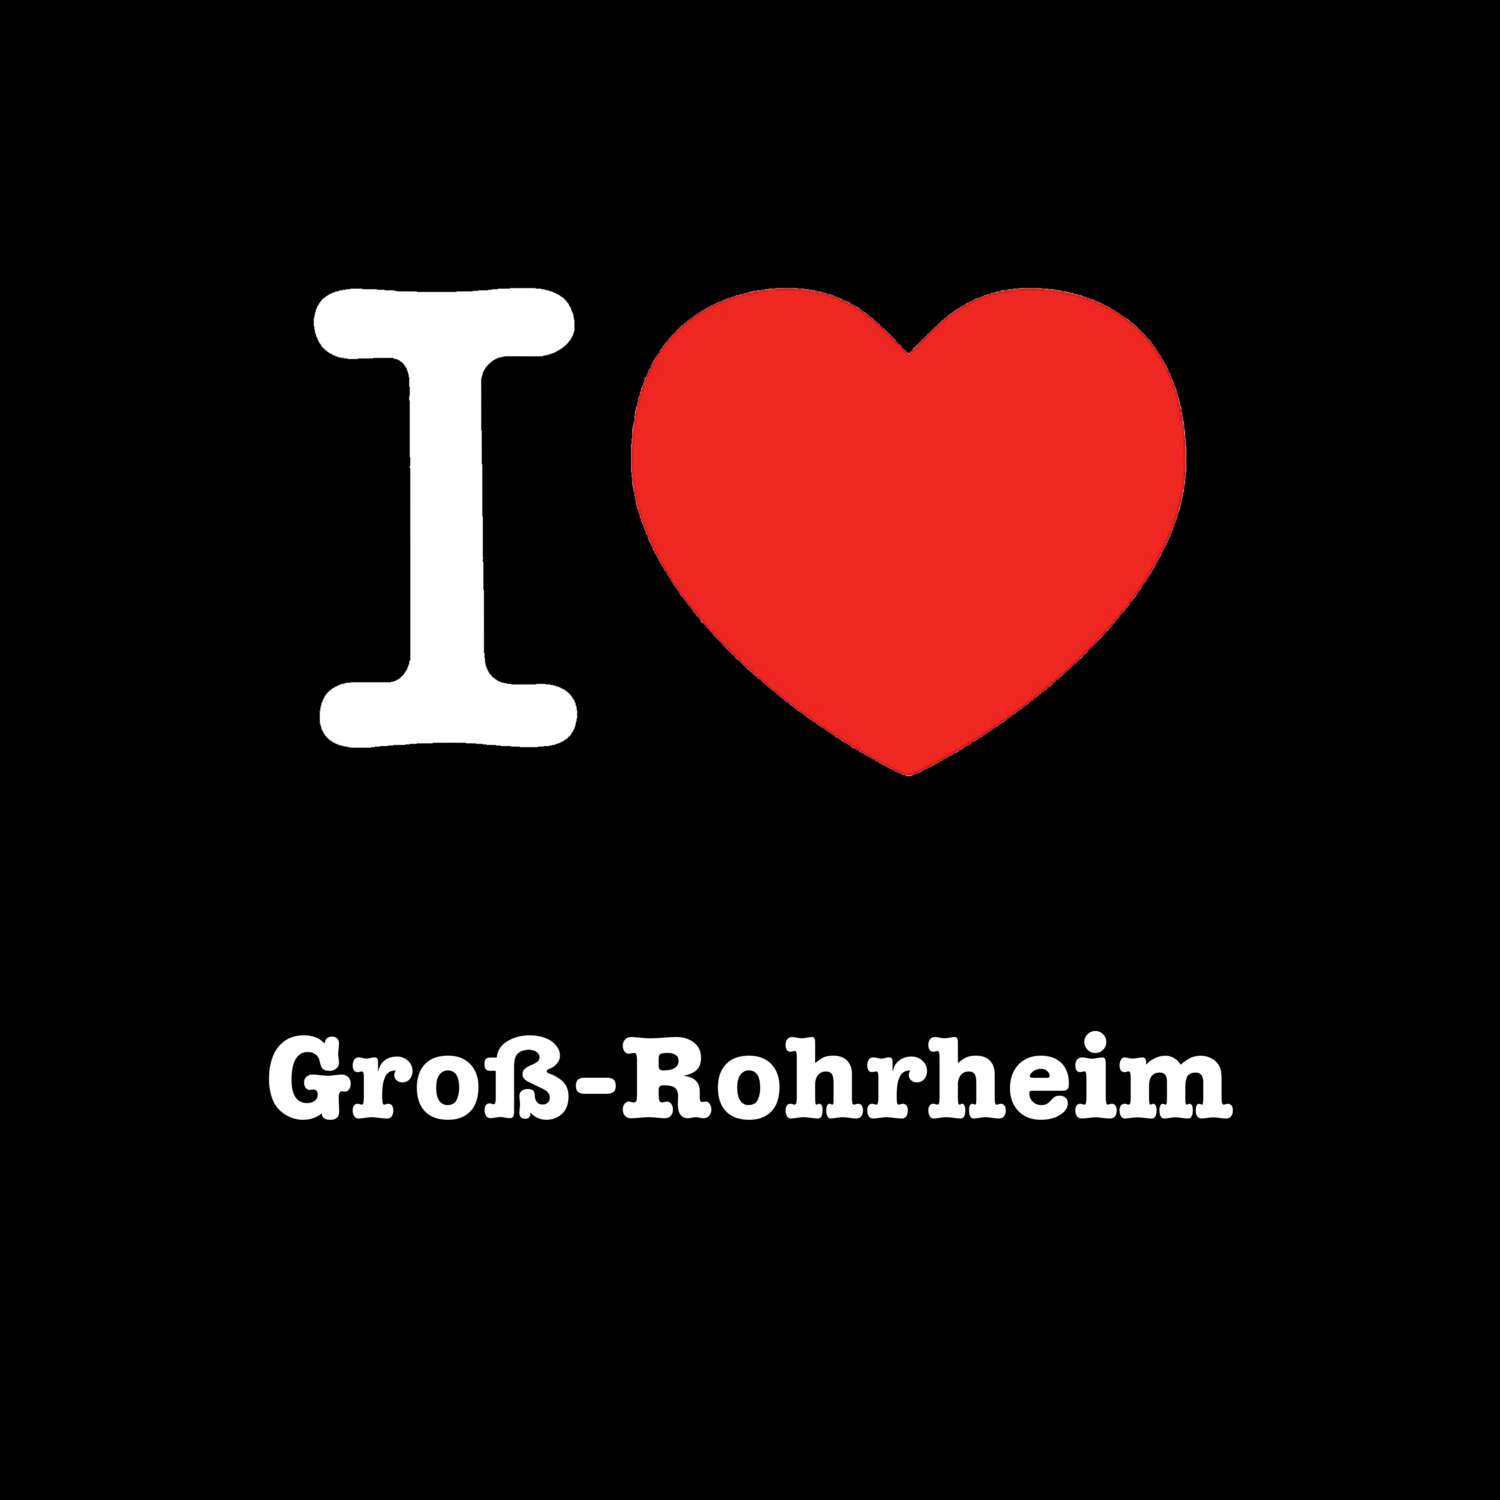 Groß-Rohrheim T-Shirt »I love«